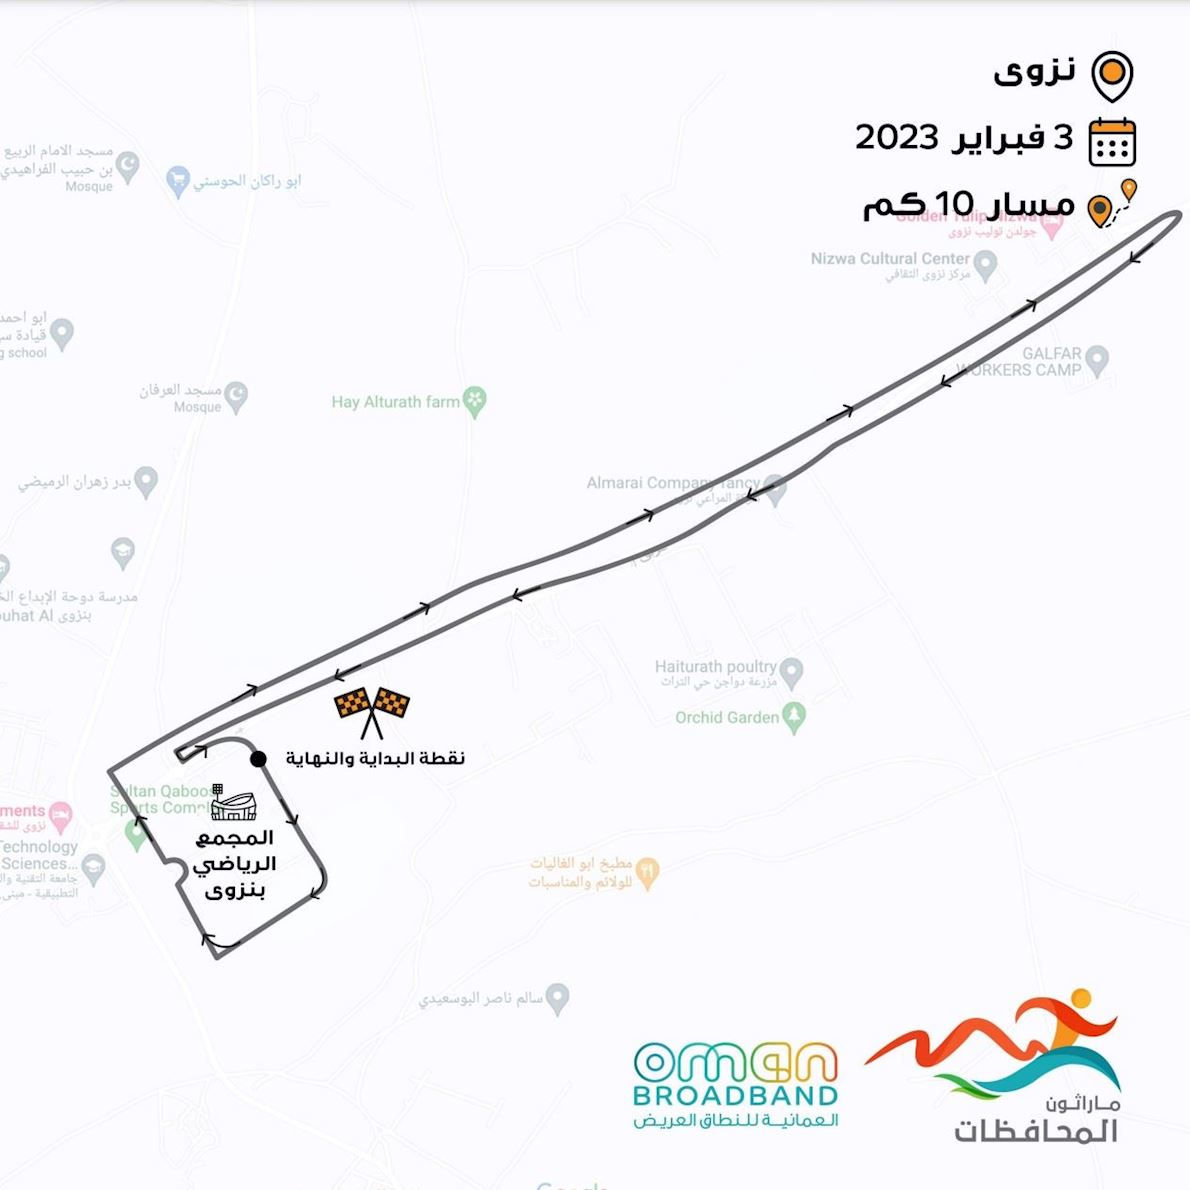 Oman Broadband Governorates Marathon Routenkarte